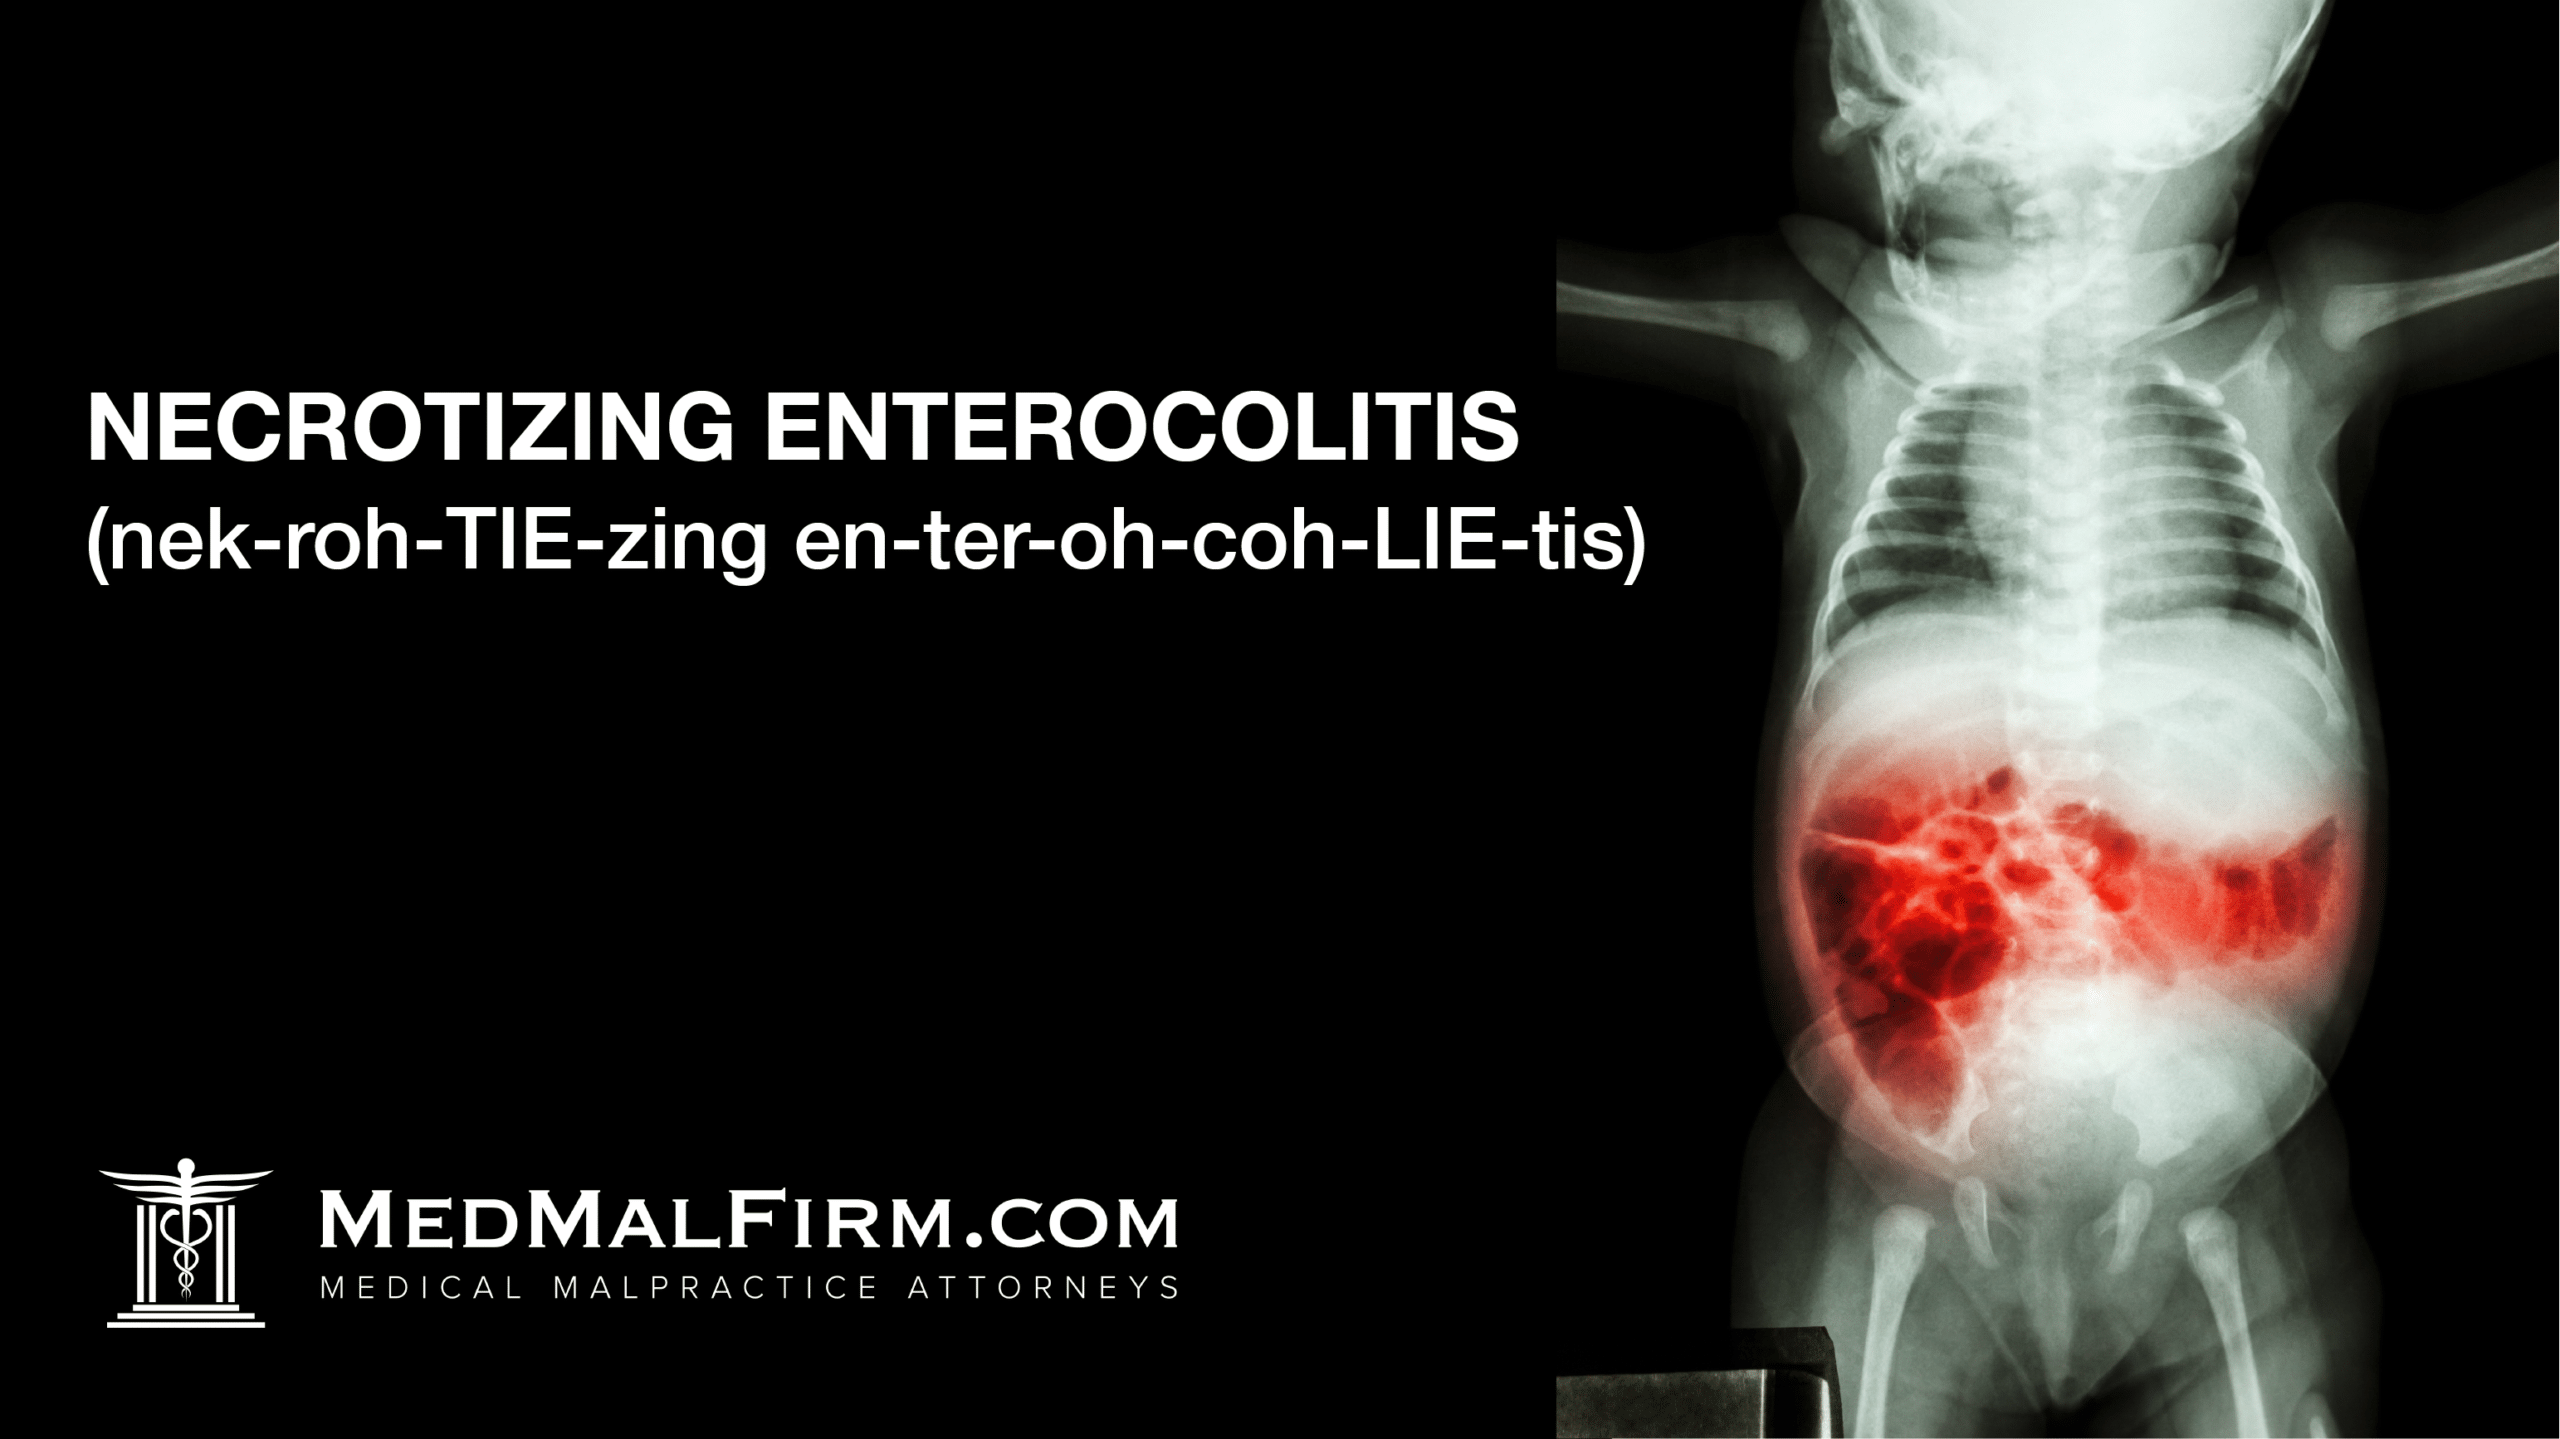 Necrotizing enterocolitis